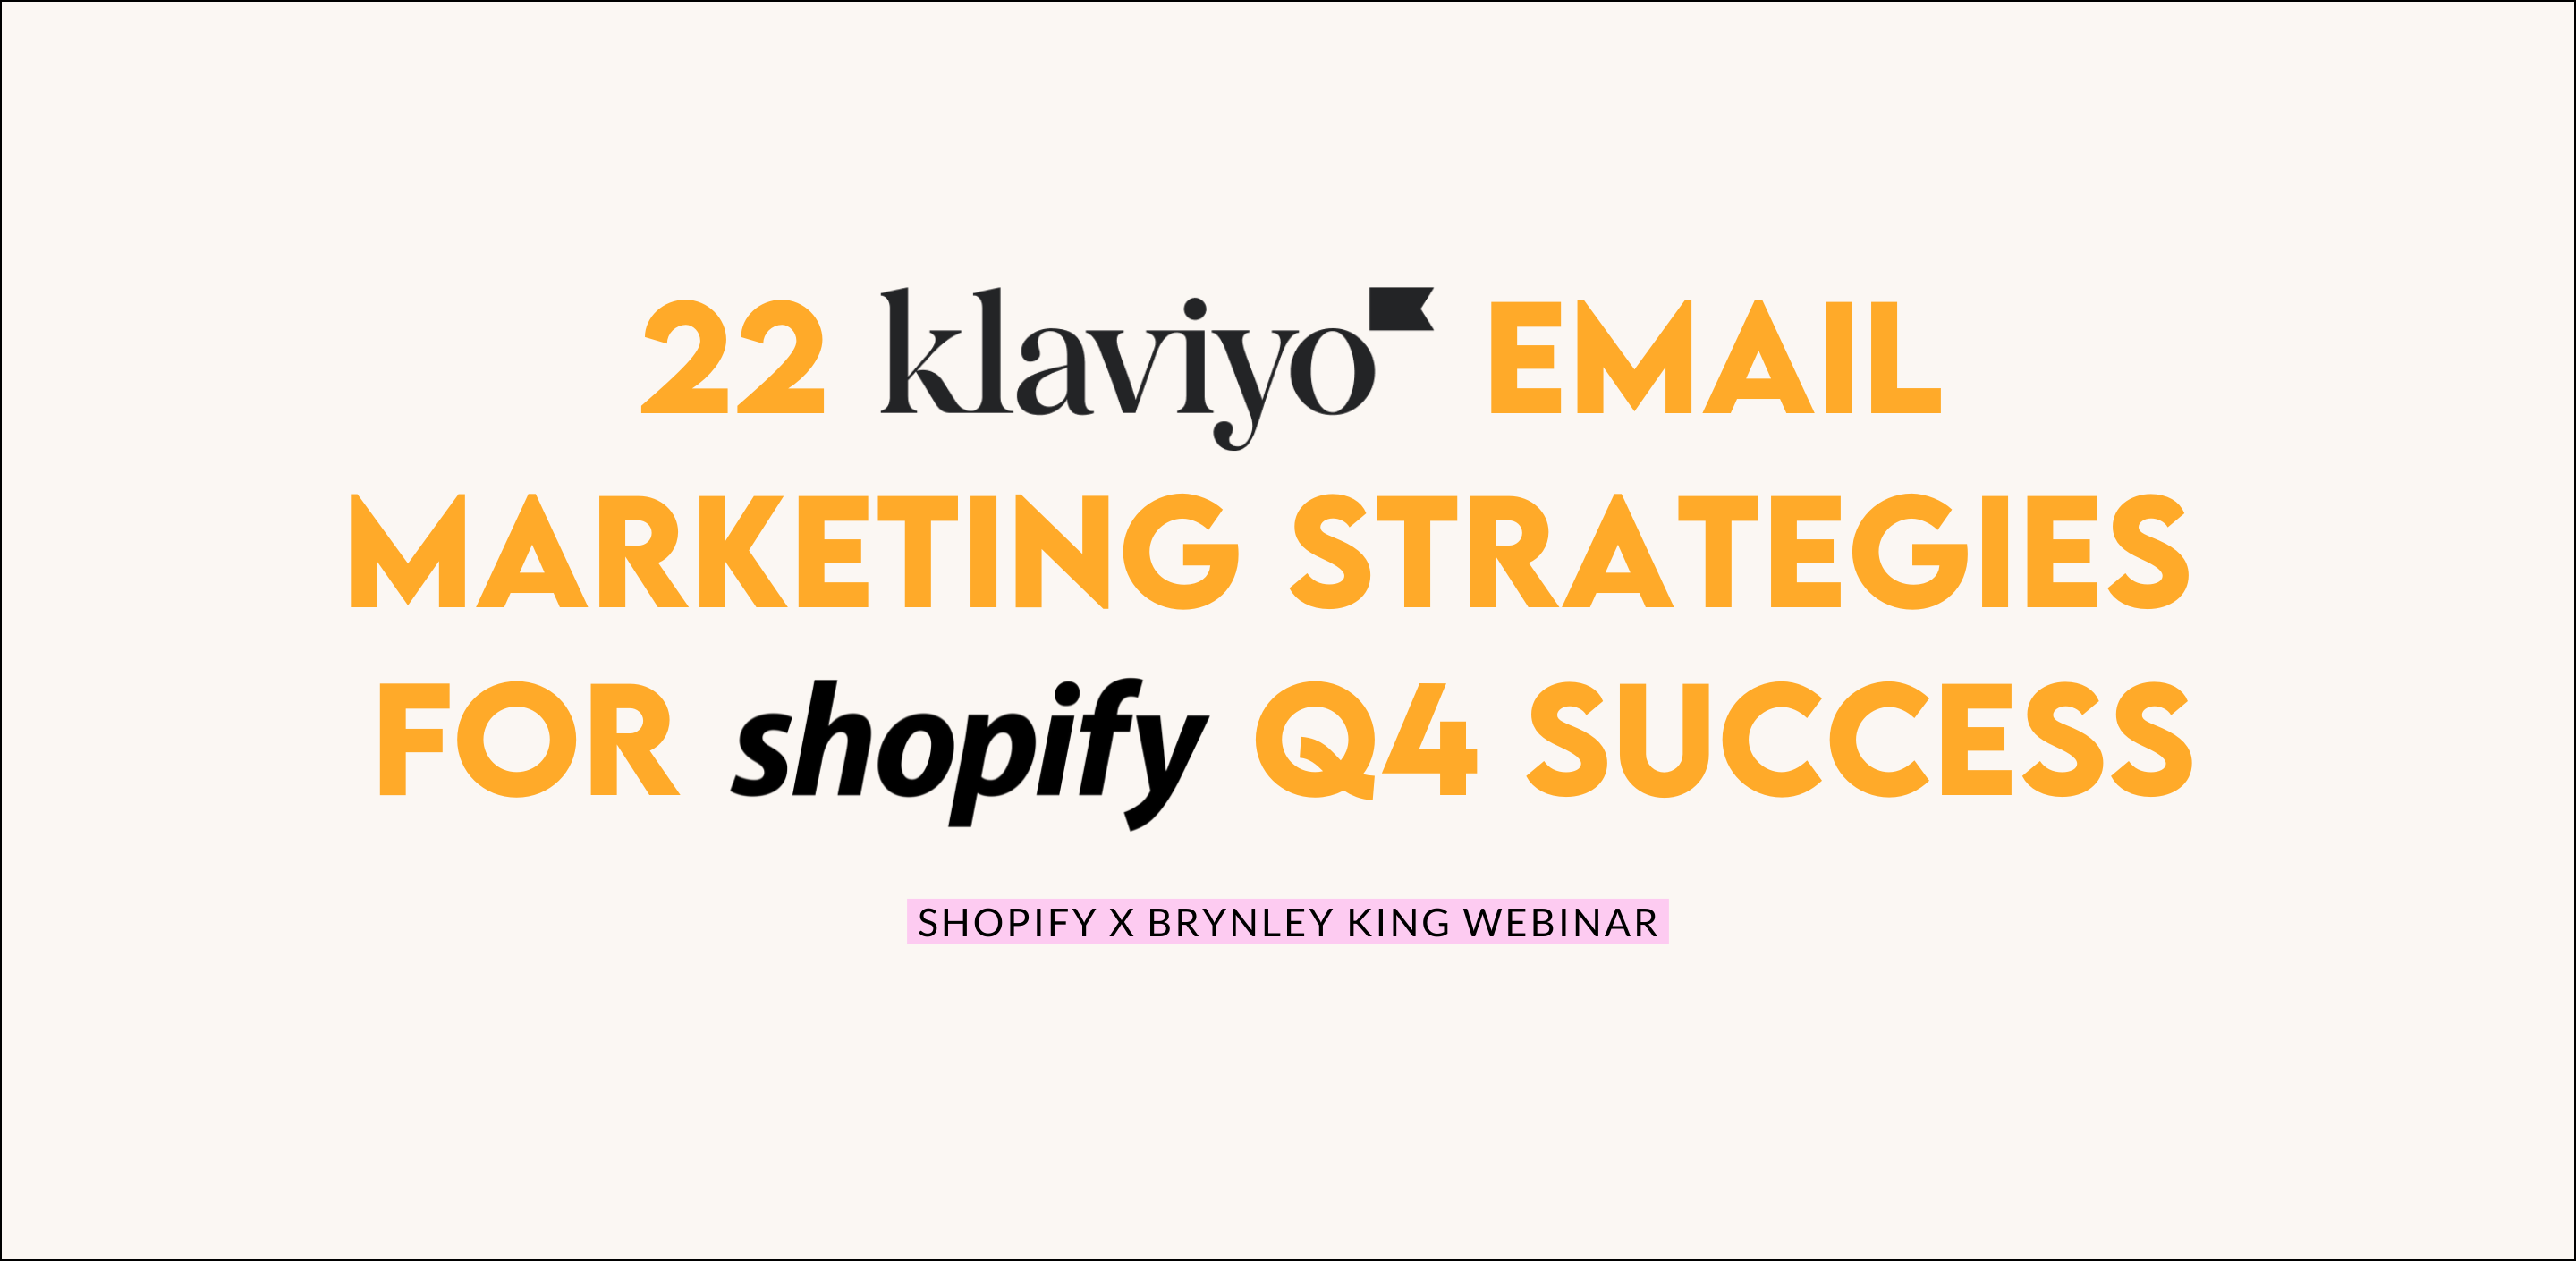 KLAVIYO TIPS: 22 Klaviyo Email Marketing Strategies to Prepare for Q4 Success